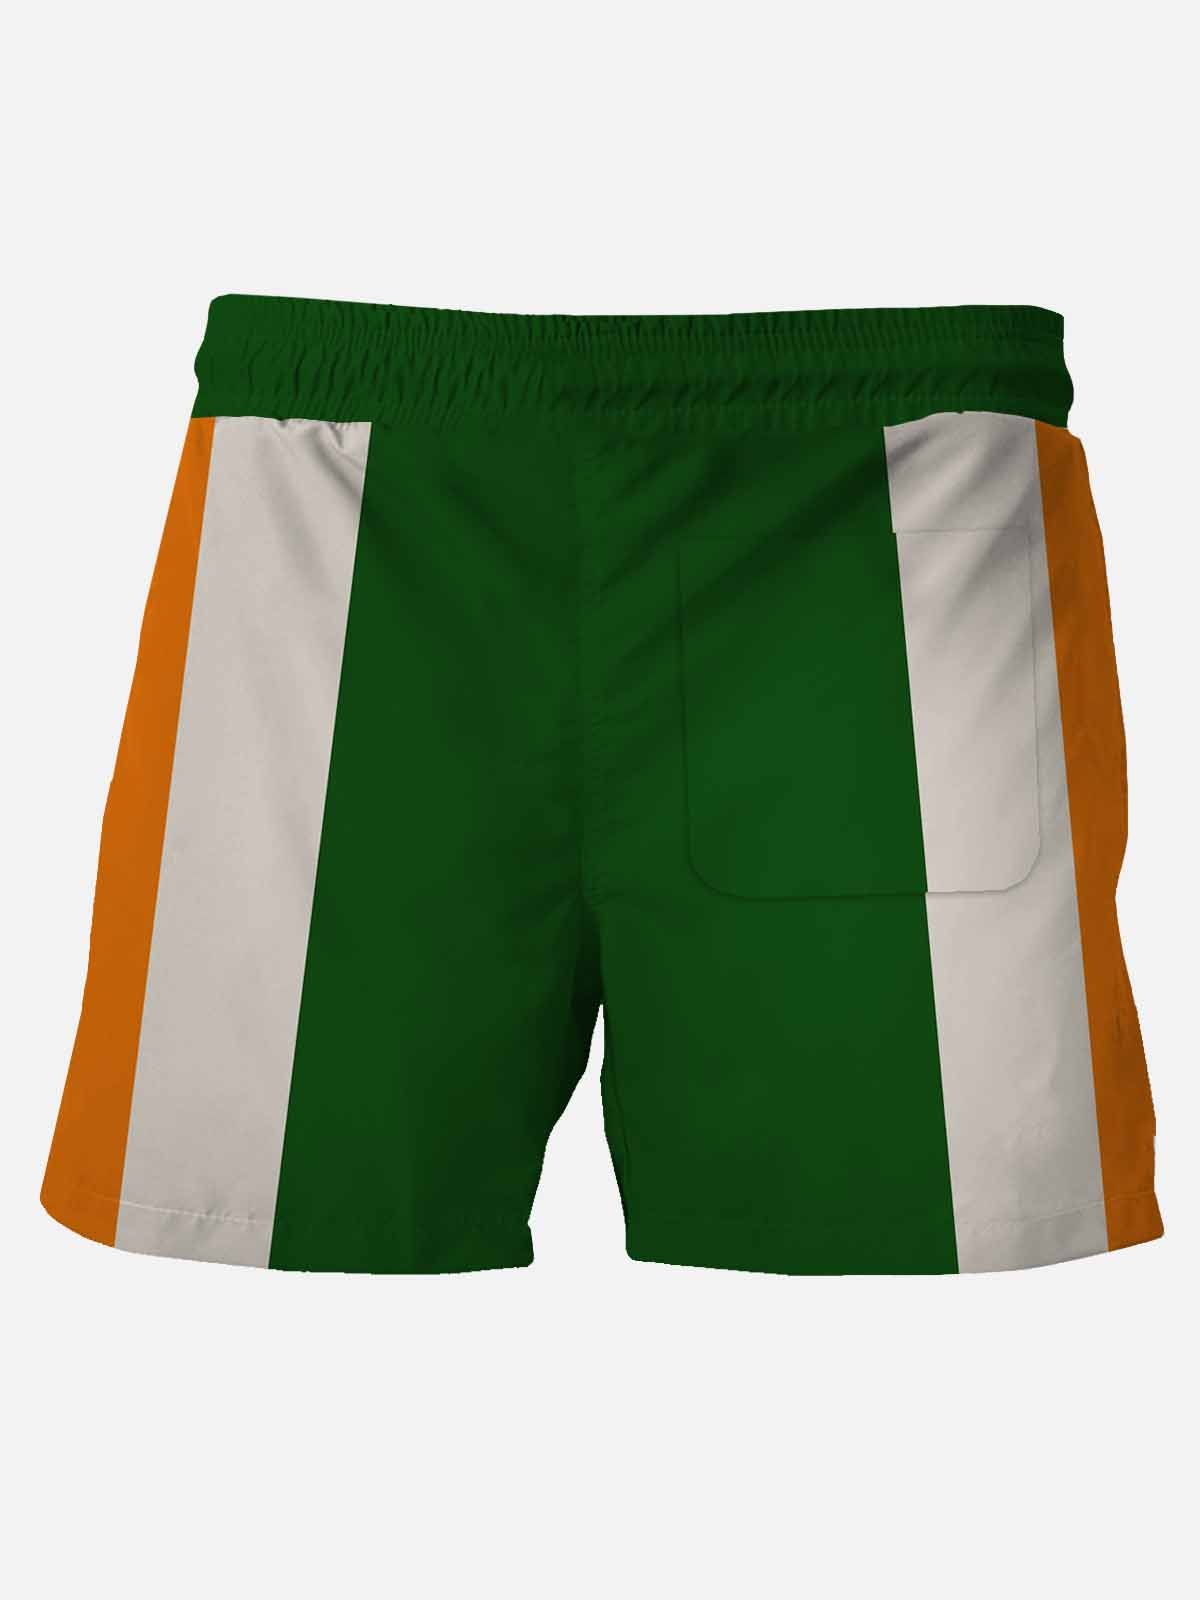 Royaura Holiday St. Patrick Men's Hawaiian Beach Shorts Elastic Waist Large Size Stretch Quick Dry Clover Shorts